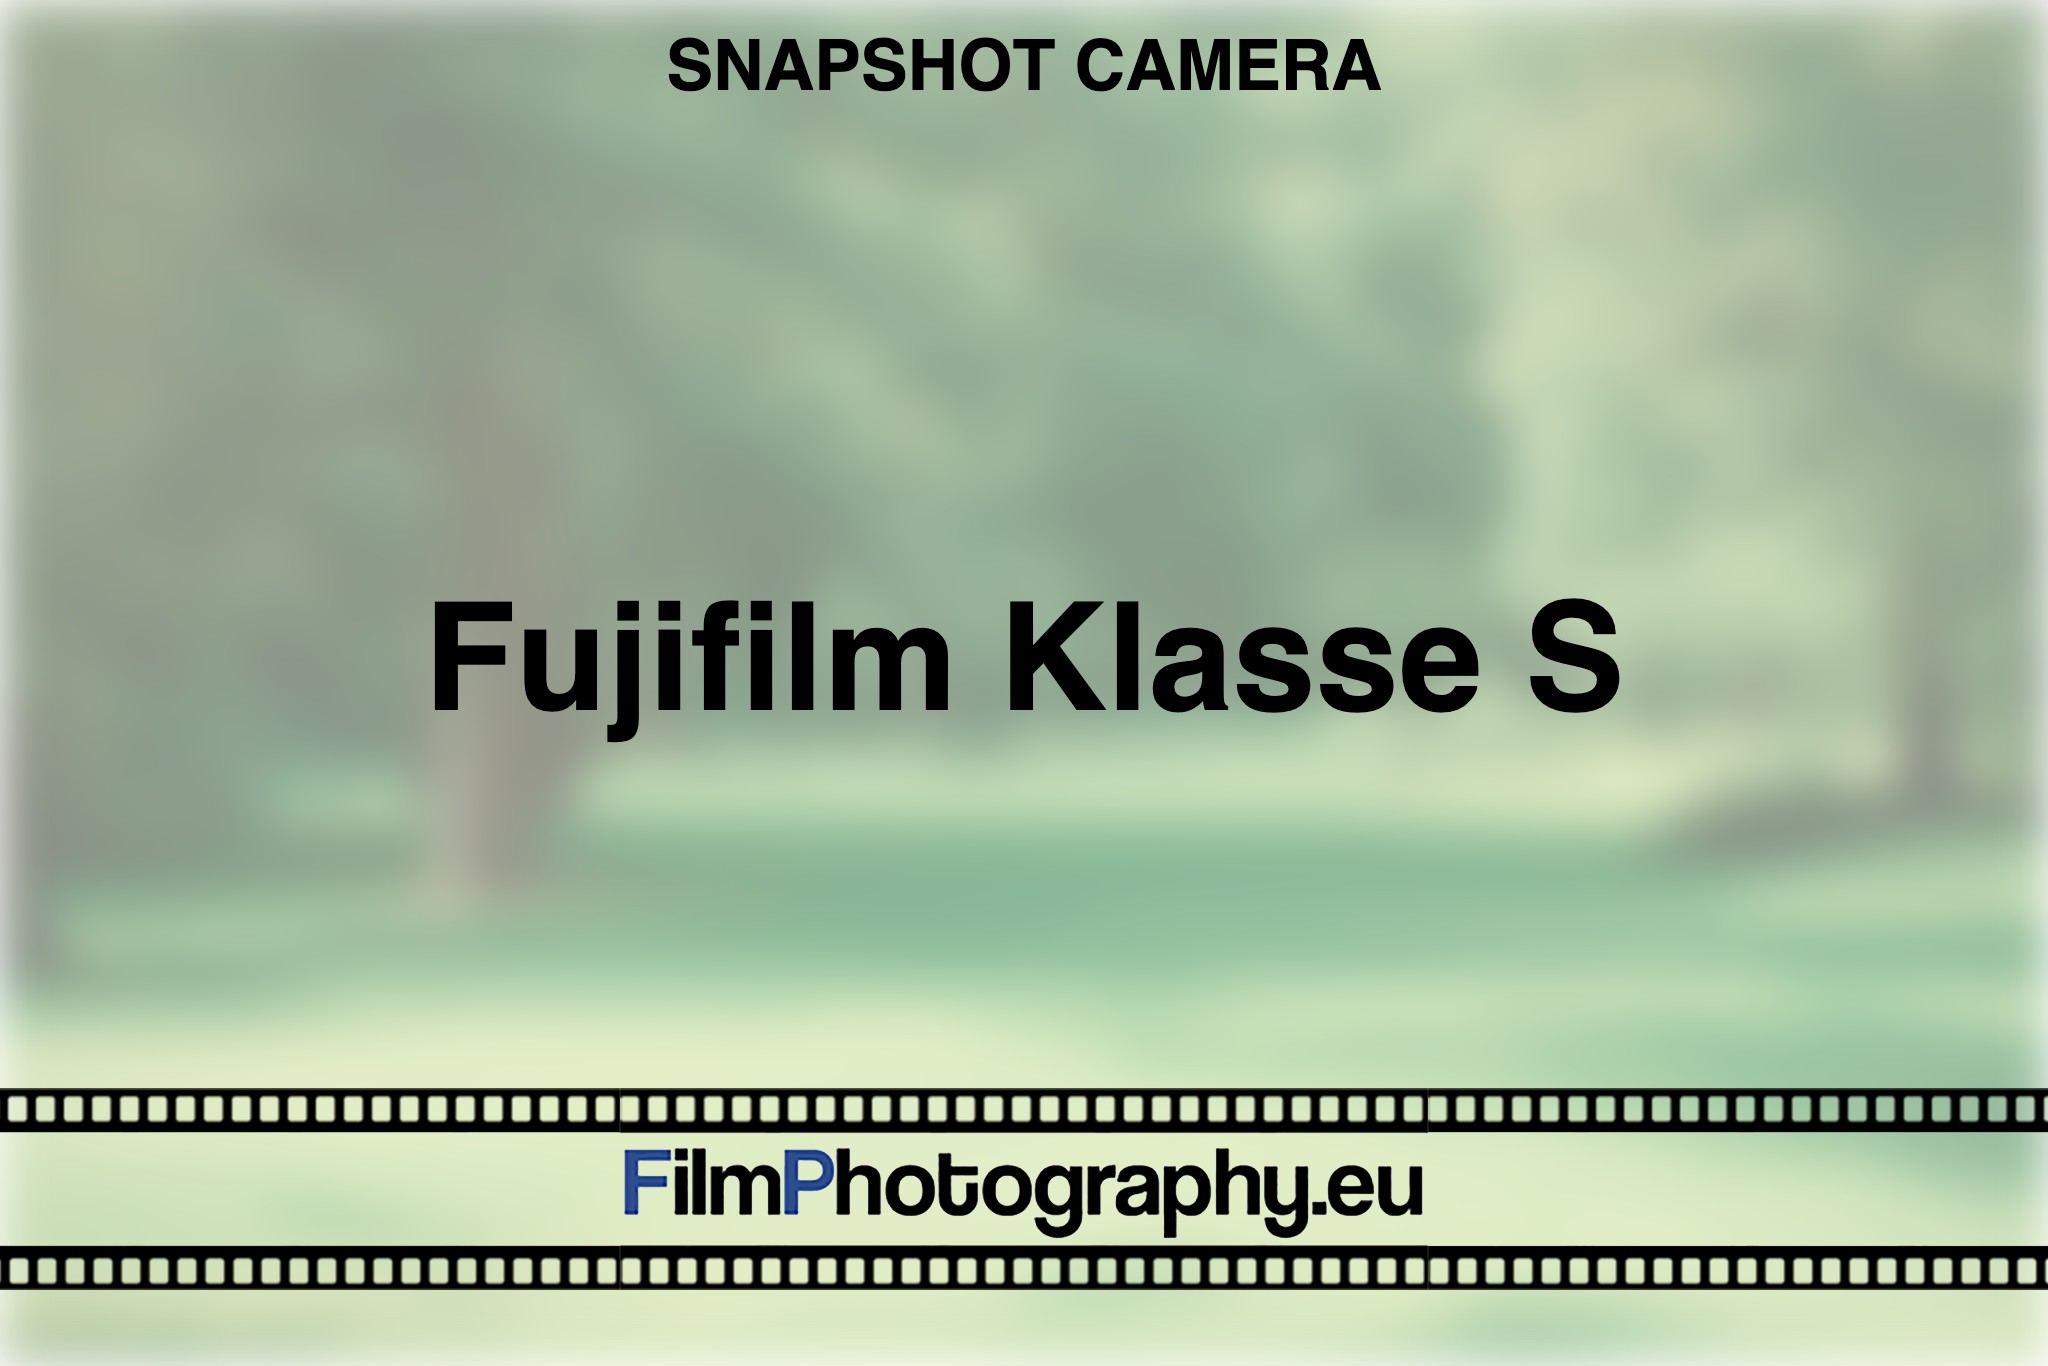 fujifilm-klasse-s-snapshot-camera-bnv